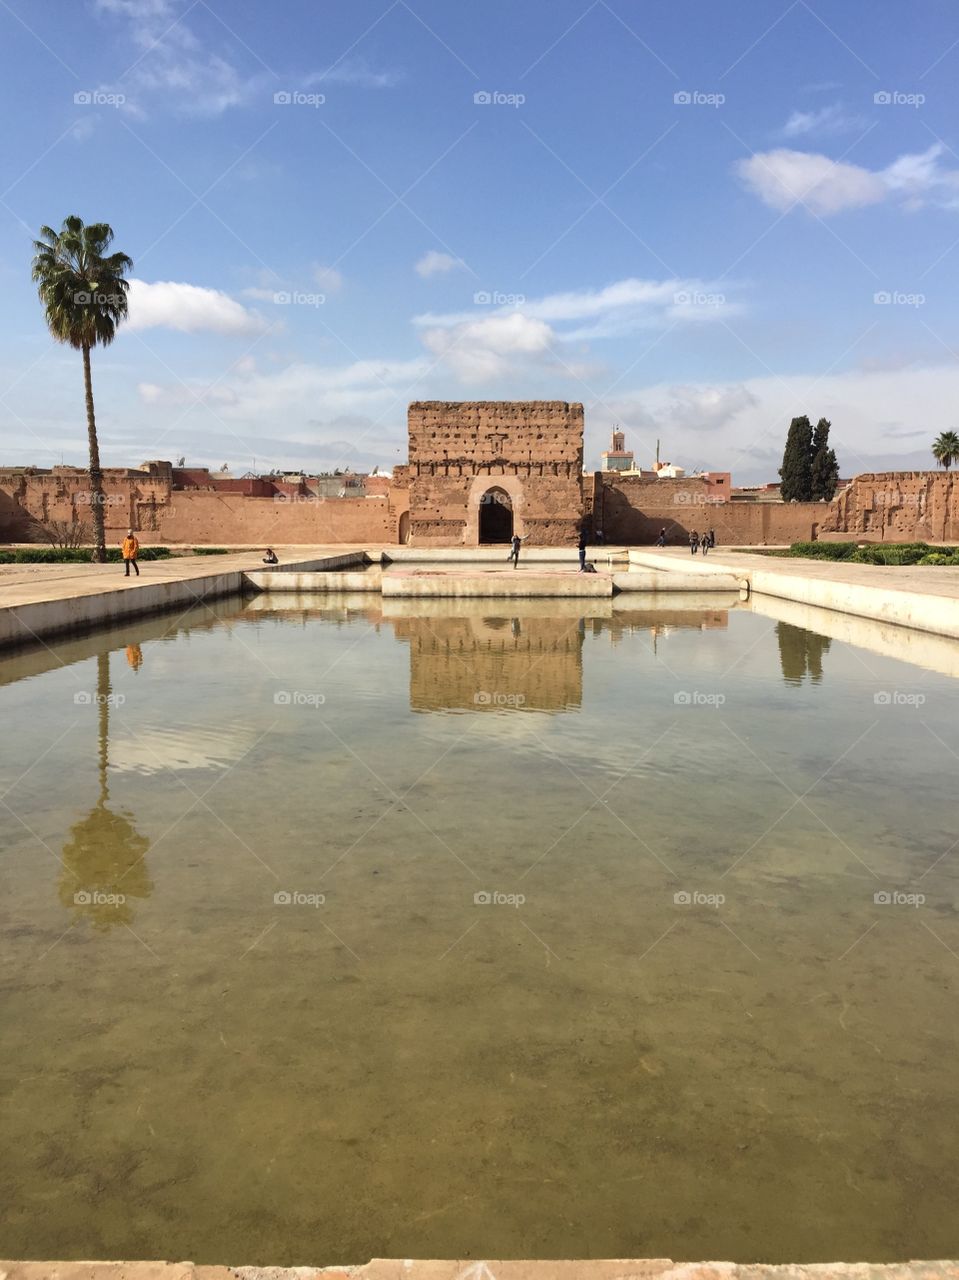 El Badi Palace. Palace in Marrakech, Morocco